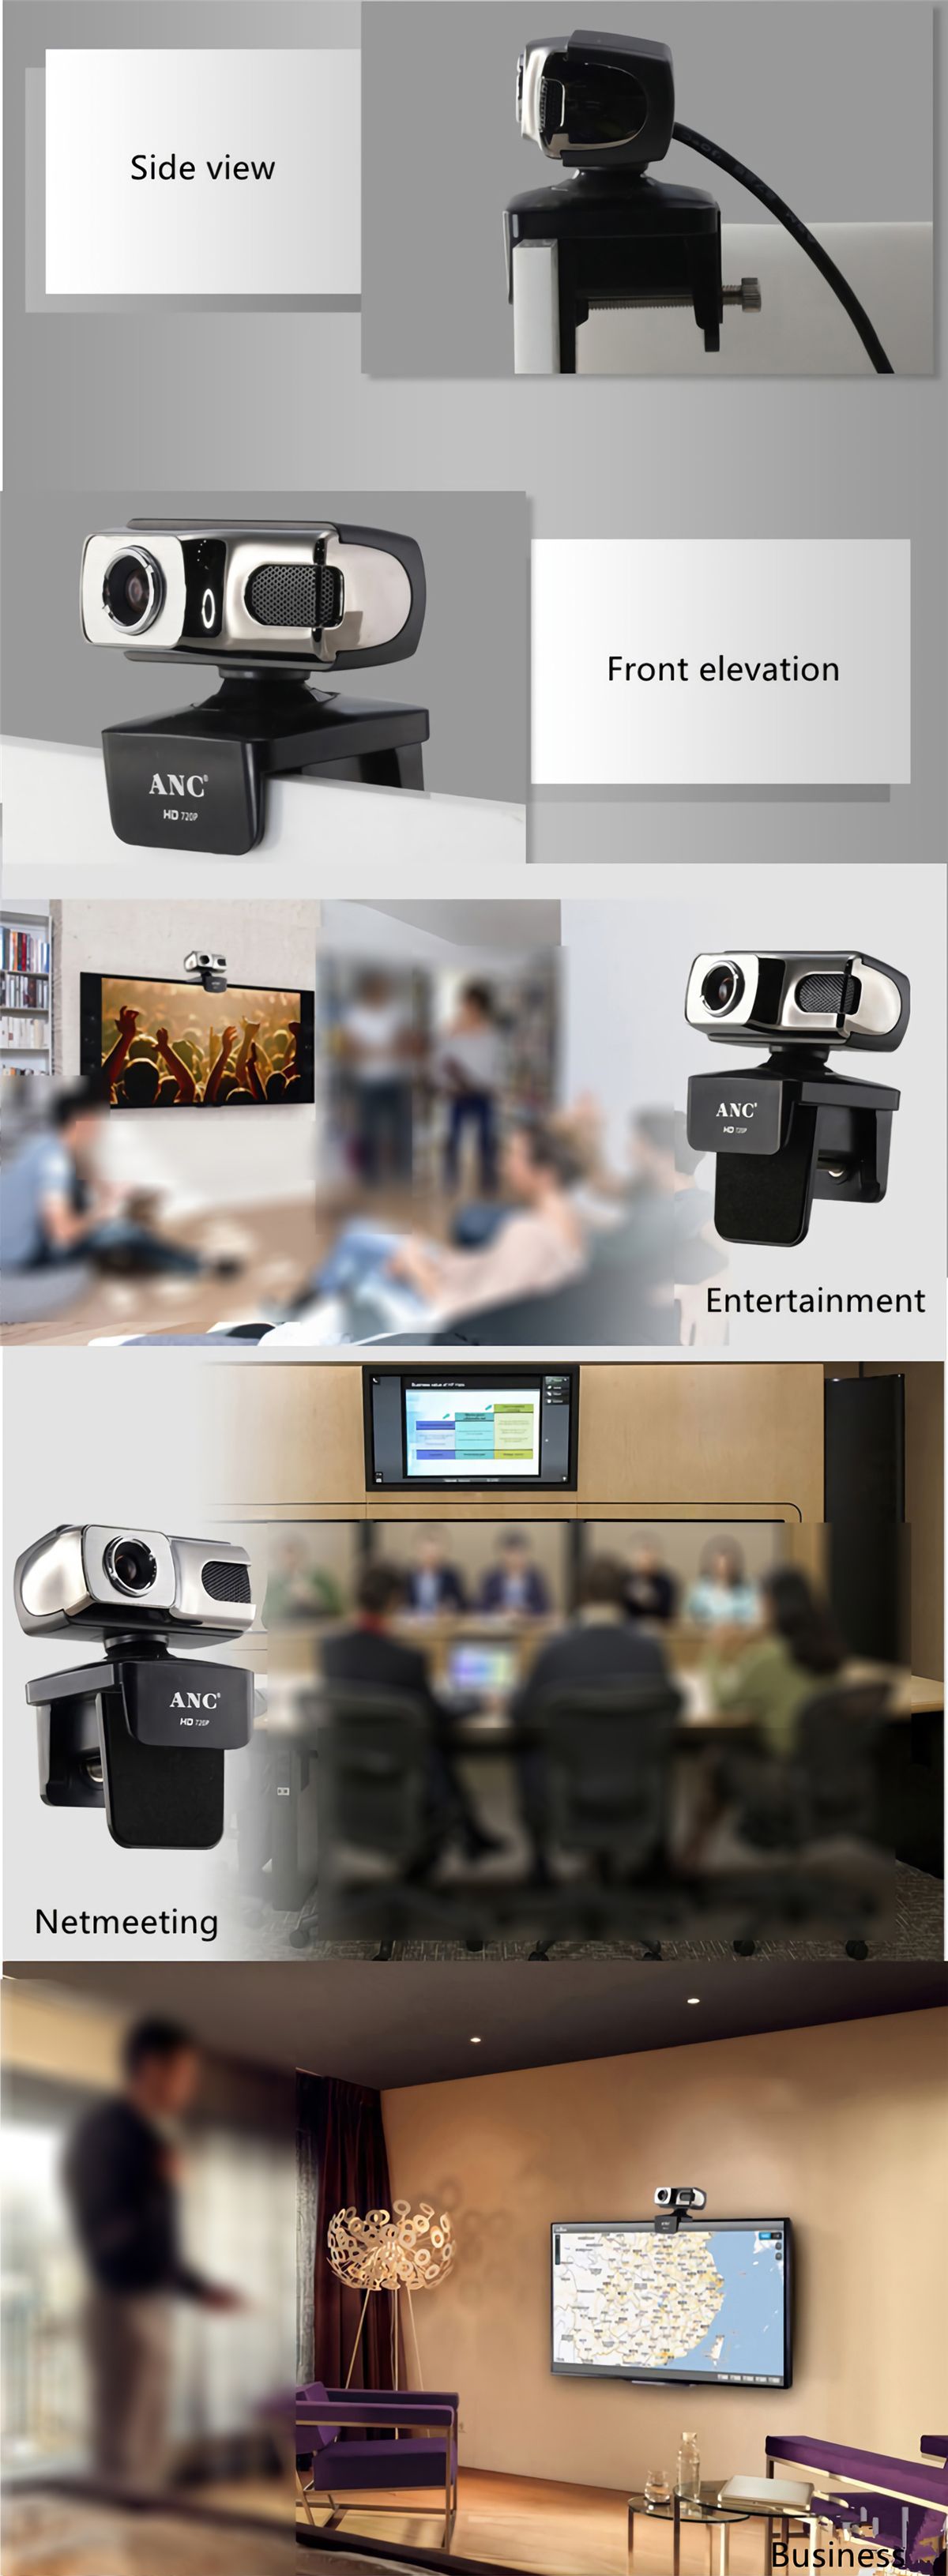 Aoni-ANC-HD-720P-Webcam-CMOS-30FPS-10-Million-Pixels-USB-20-HD-USB-Drive-free-Camera-Video-Call-Webc-1664921